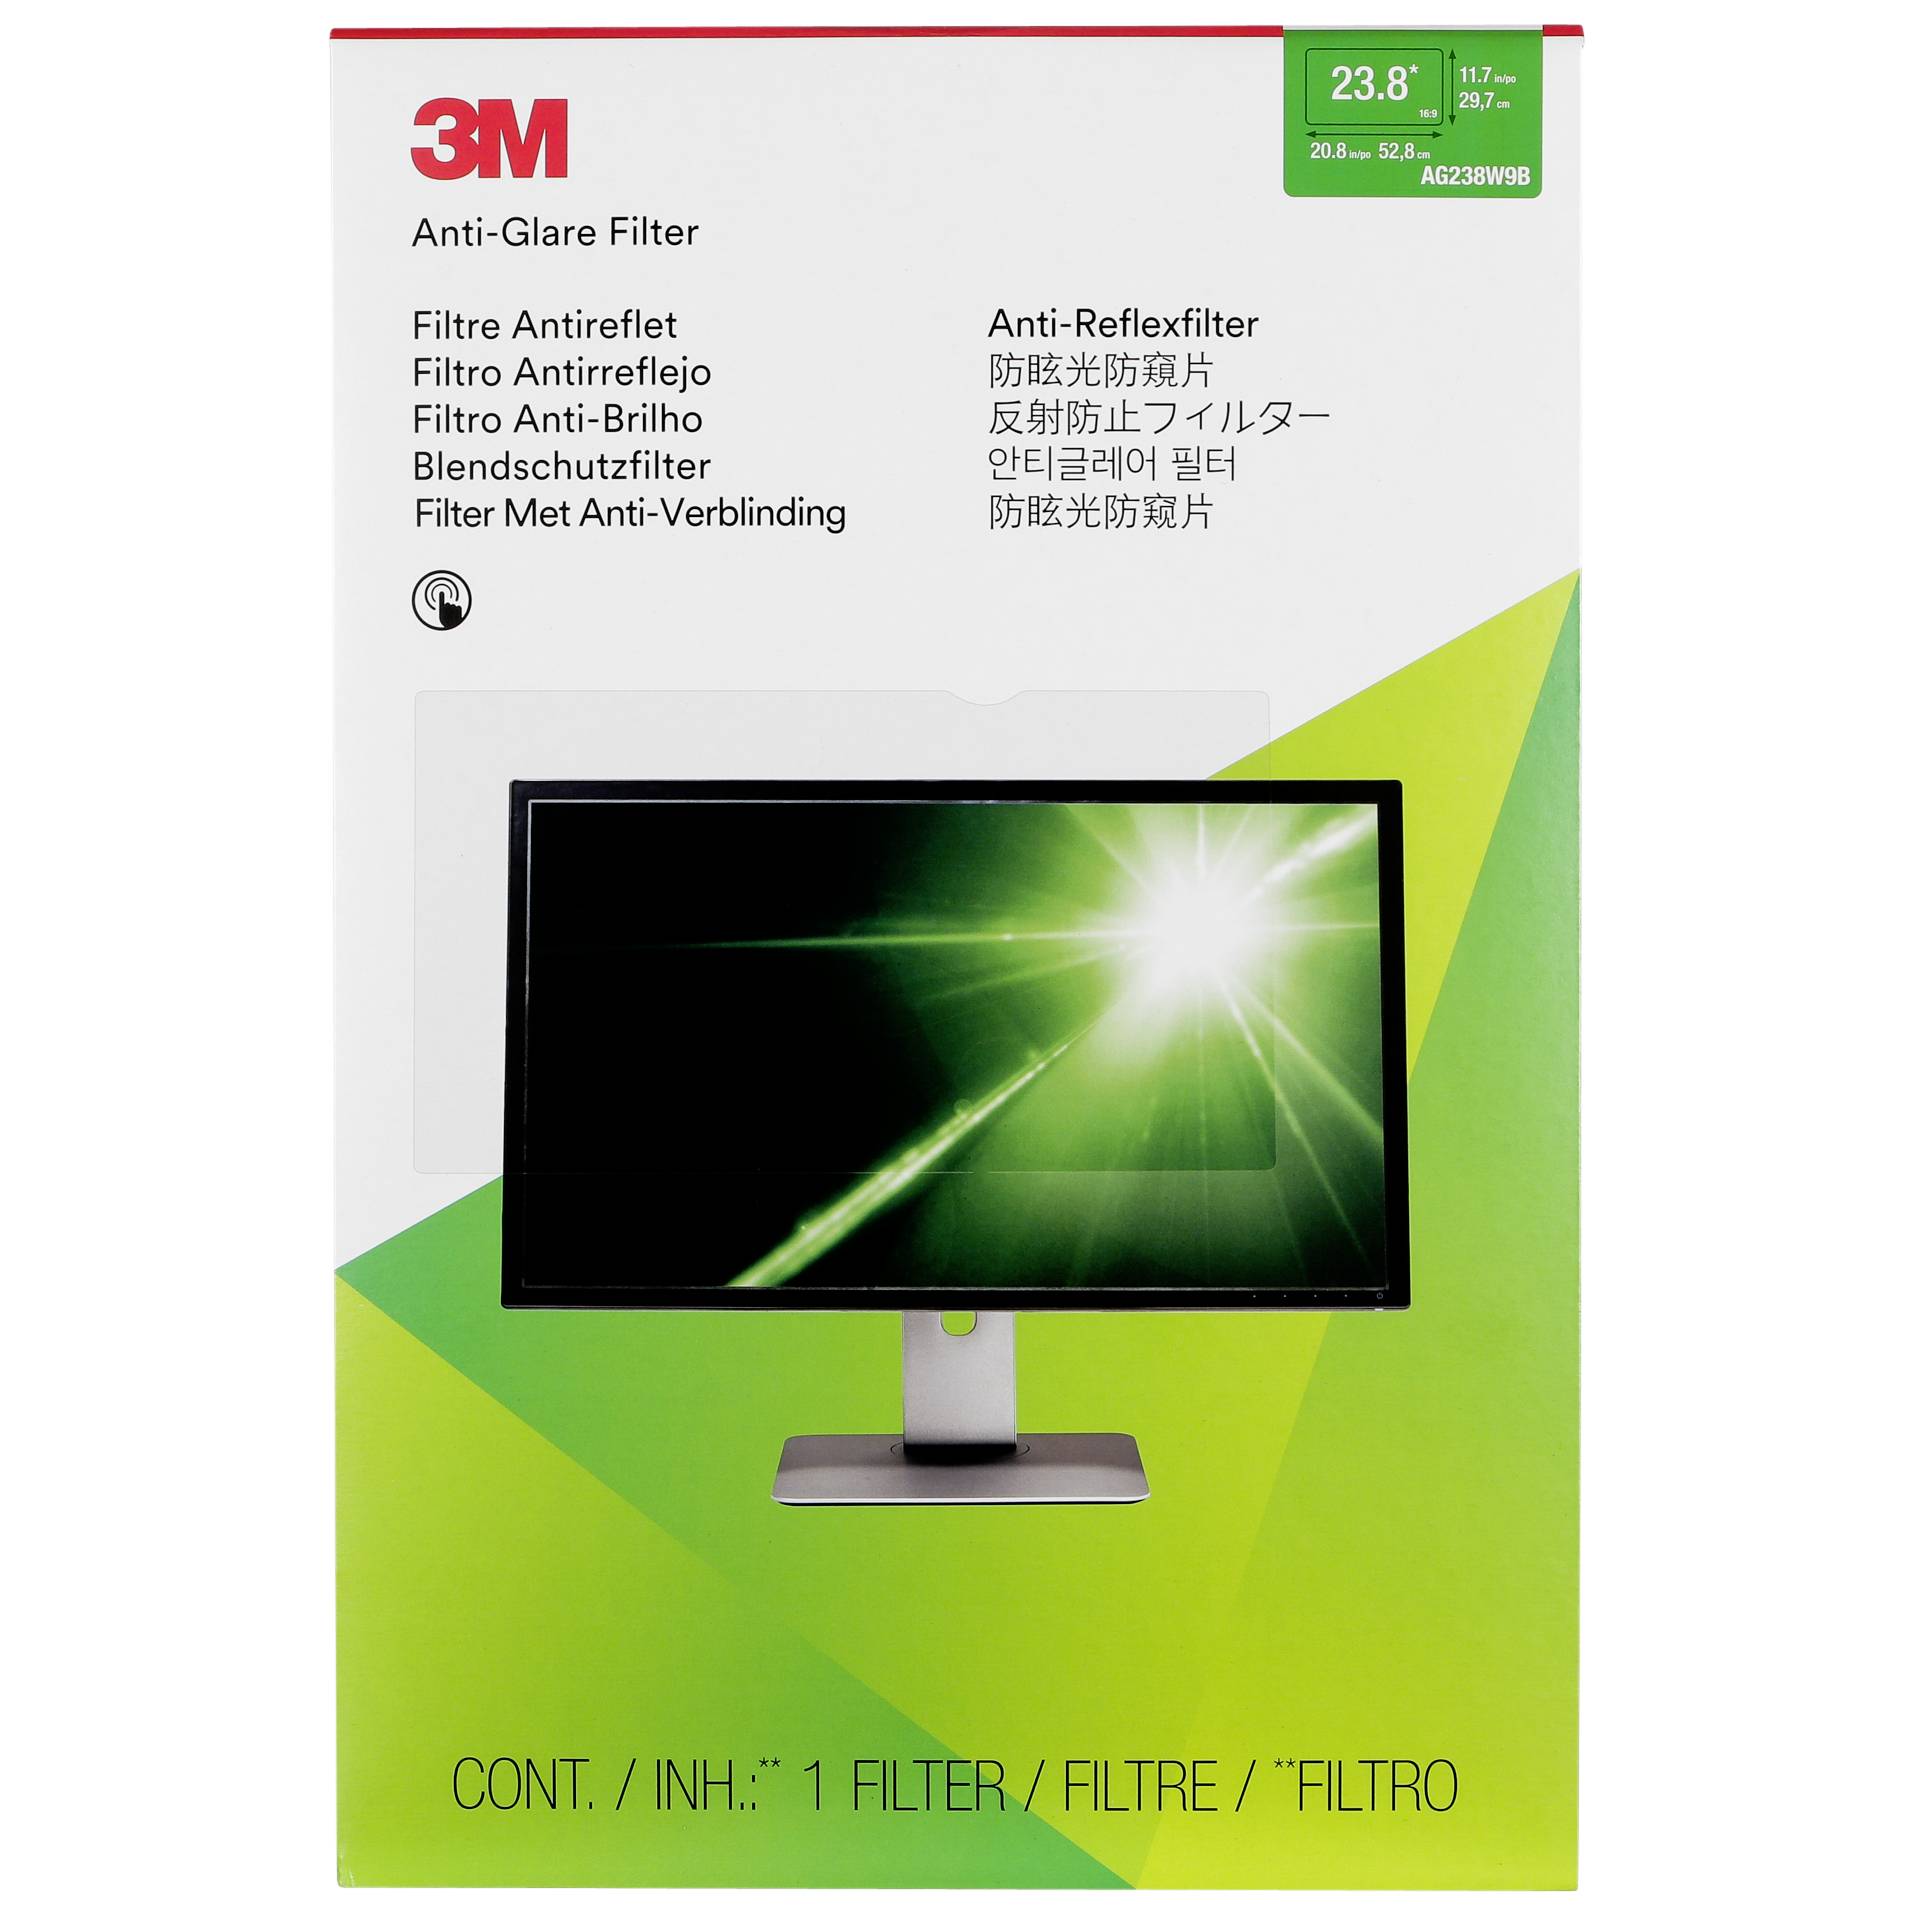 23.8 Zoll 3M AG238W9B Anti-Glare Filter 23.8 16:9 Display-Blendschutzfilter